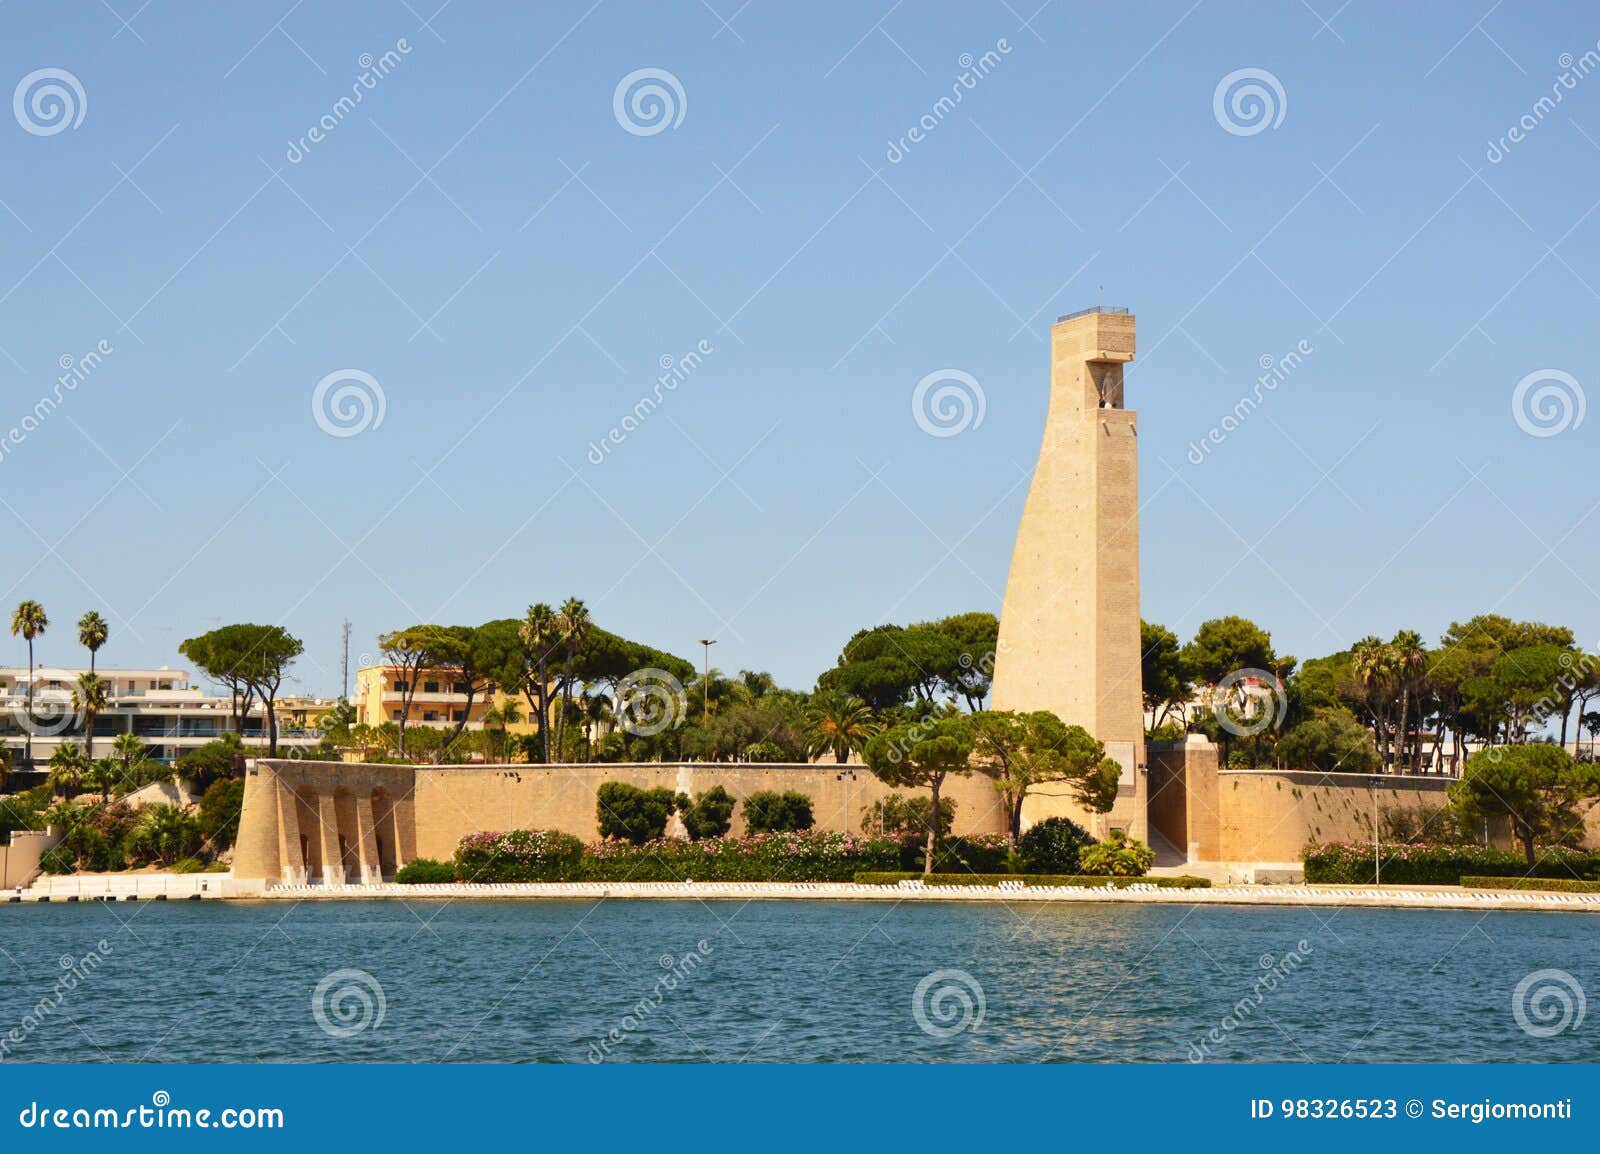 monument to the sailor of italy monumento al marinaio d`italia in brindisi city, apulia, southern italy